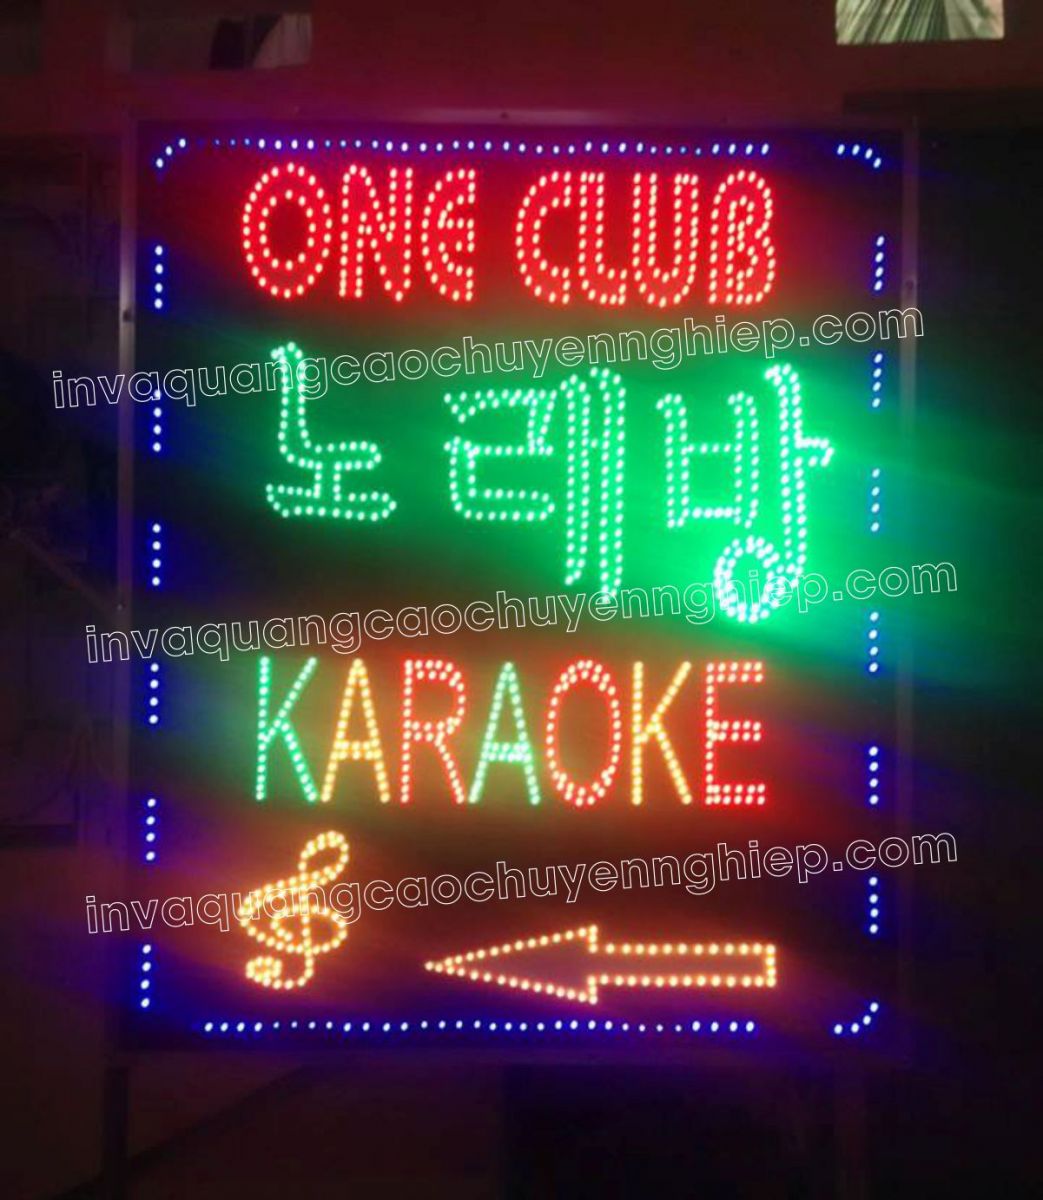 biển quảng cáo led karaoke one club